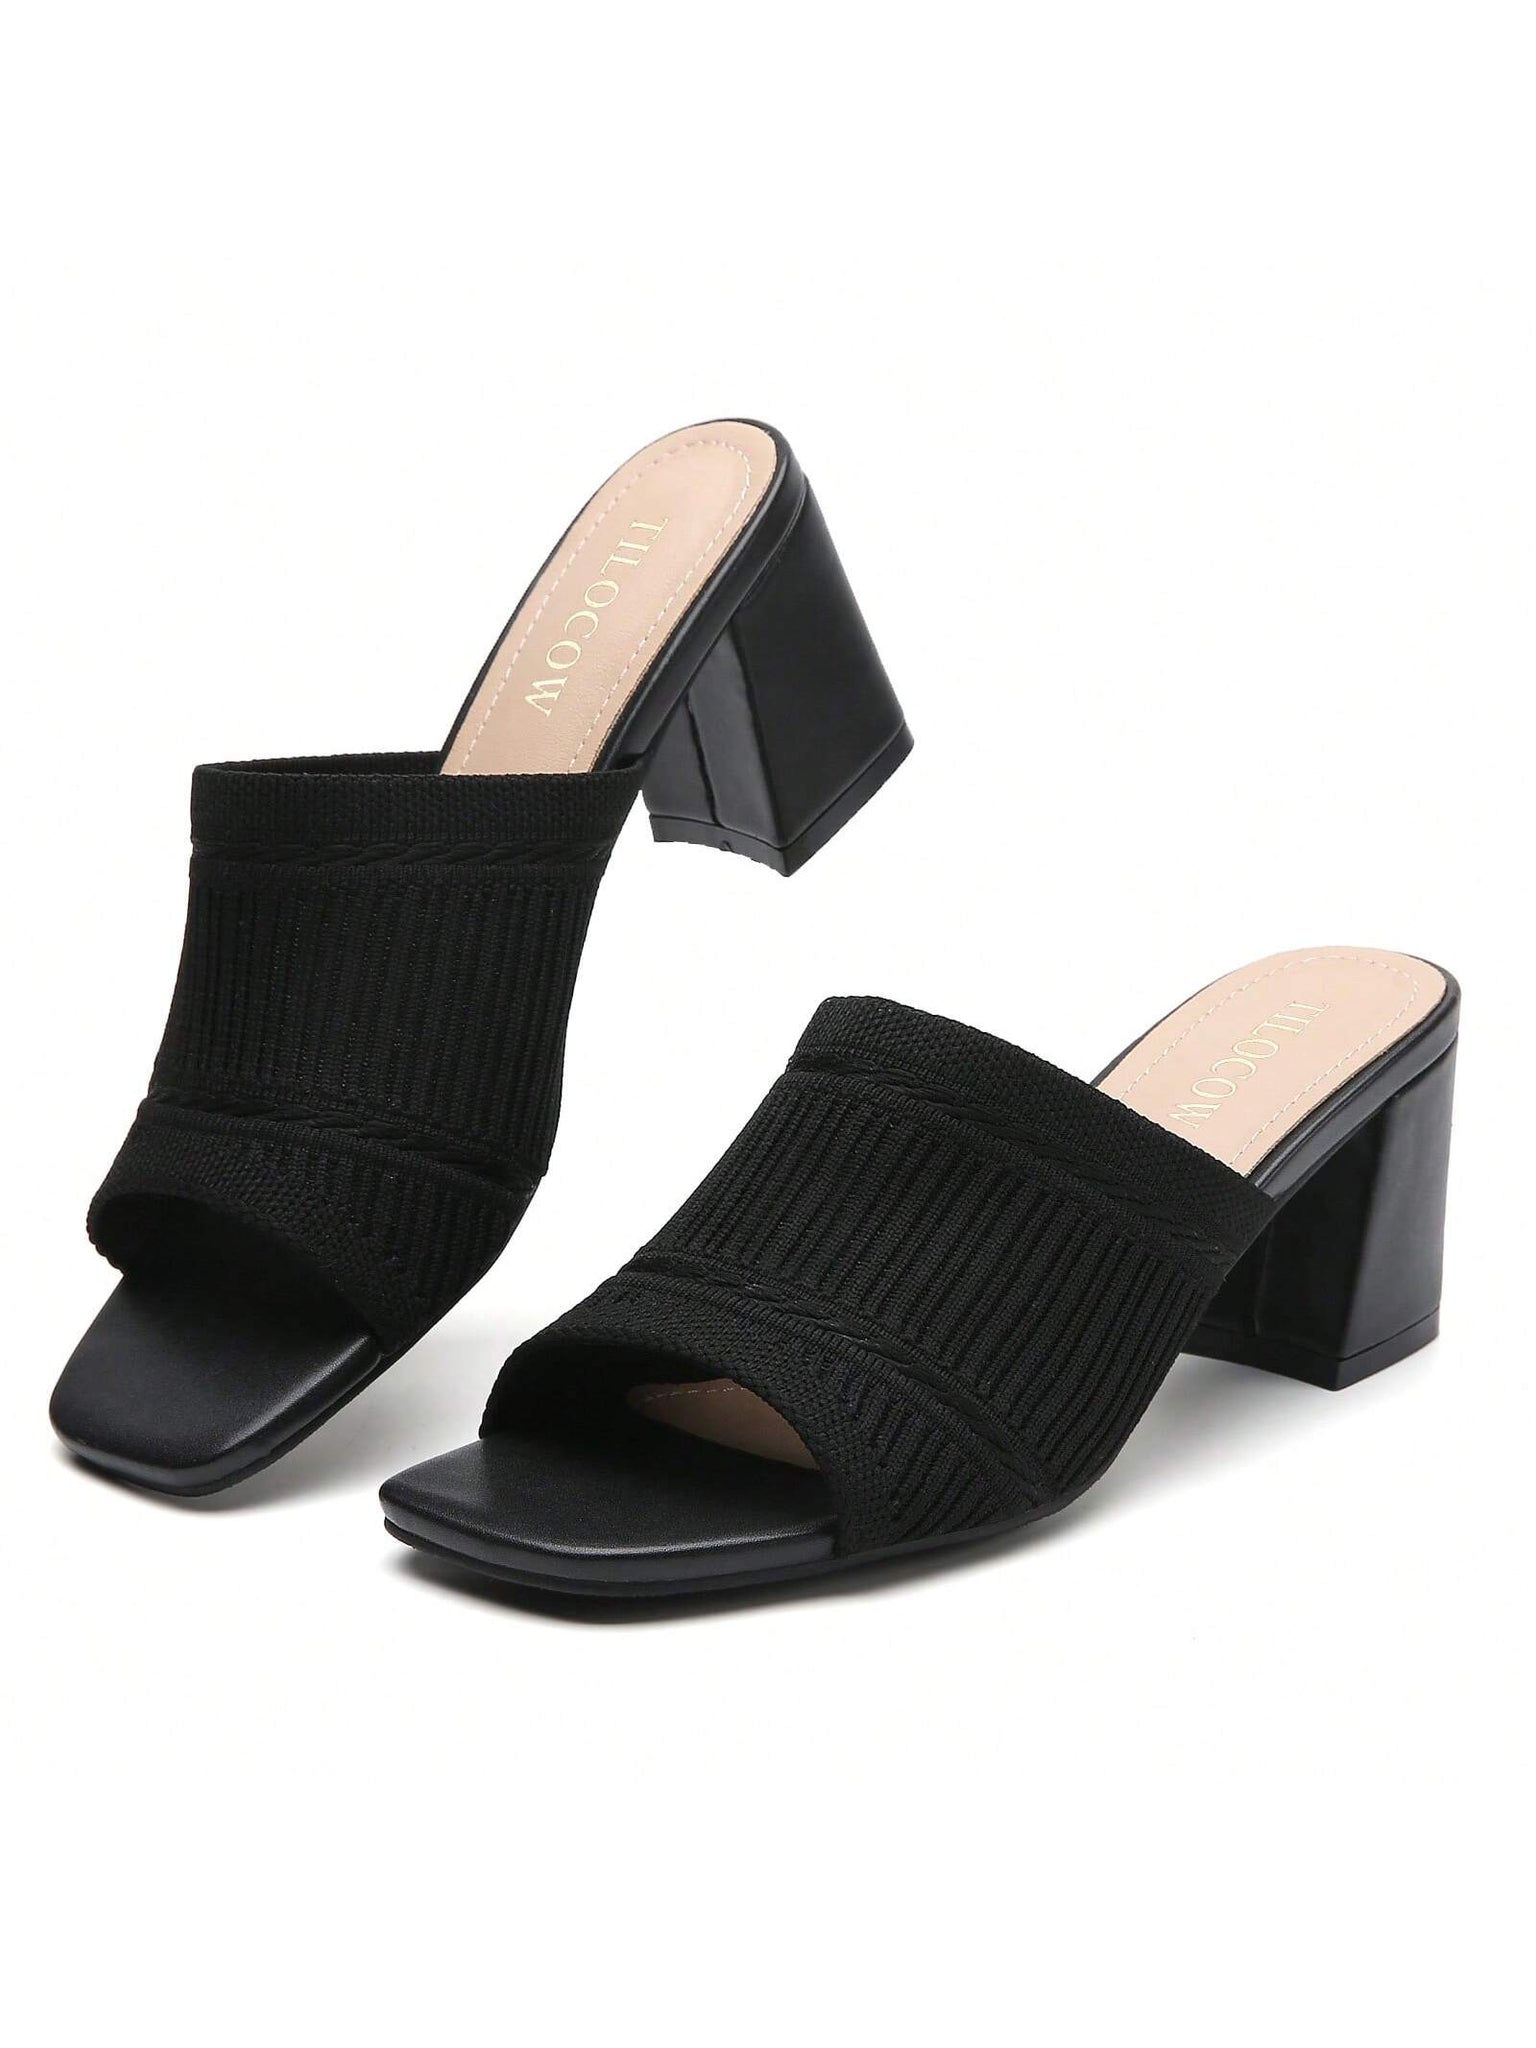 Tilocow Knit Heeled Sandals Chunky Low Block Heel Mules For Women Square Open Toe Heels Slip On Breathable Slides Sandal-Black-2